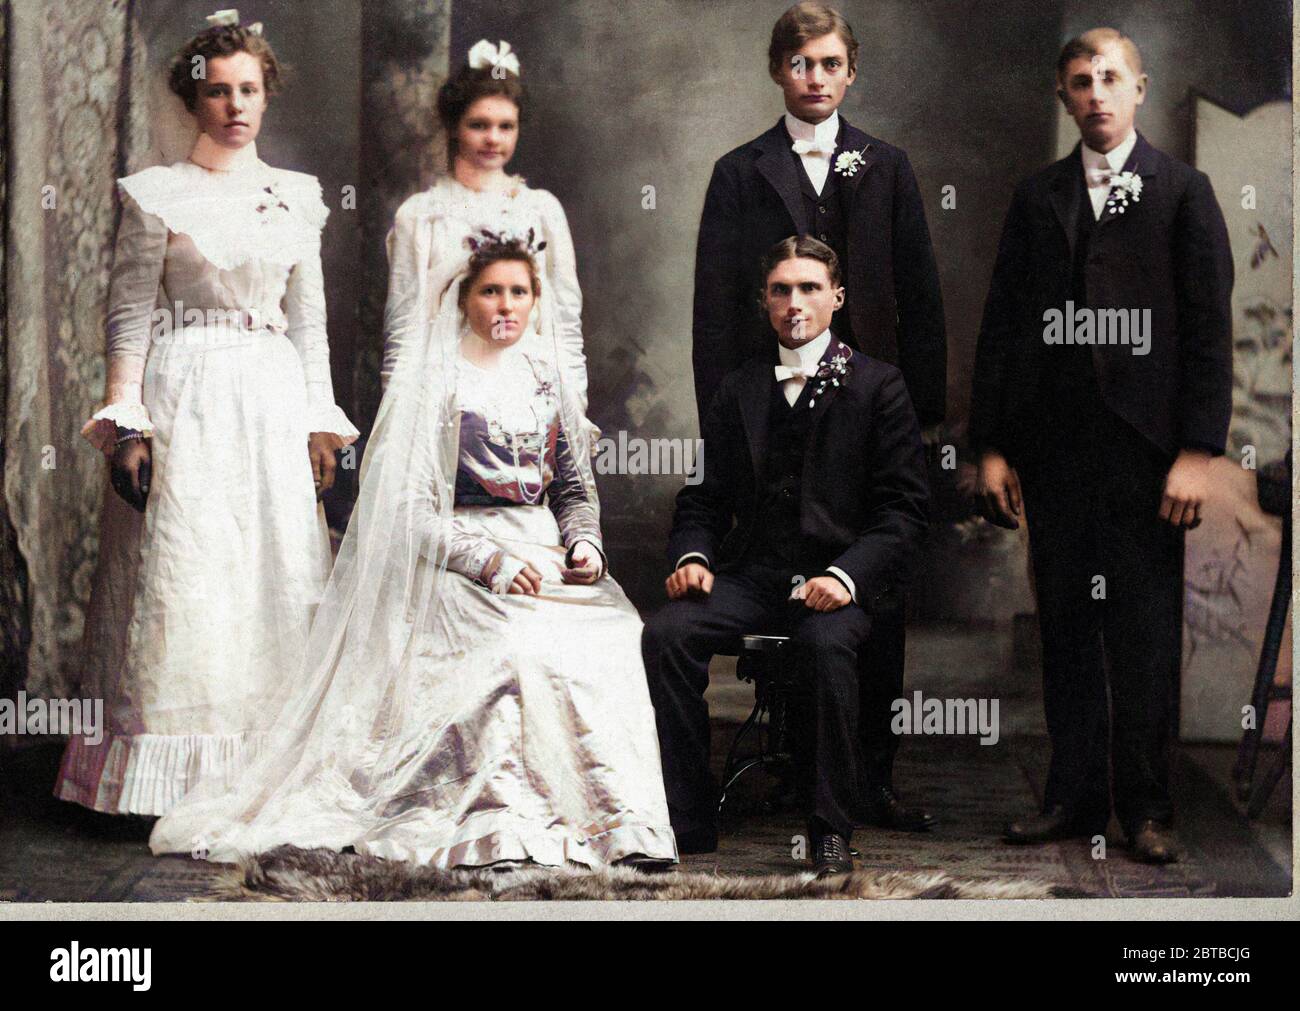 1900 ca. , Oshkosh , Winsconsinin , USA : EIN Ehepaar, das im Atelier des Fotografen posiert. DIGITAL KOLORIERT . - SPOSI - sposalizio - MATRIMONIO - JUST MARRIED - MARRIAGE - COPPIA - marito e moglie - Ehemann und Ehefrau - abito da sposa - Hochzeitskleid - Schleier - velo - Krawatte - papillon - Krawatte - Krawatte - Colletto - papillon - strascico - sposo - Cerimonia Di nozze - gente comune - normale Leute - FOTO STORICHE - GESCHICHTE - Album - vita privata - Privatleben - MODE - MODA - Kostüm - testimonio - testimoni - testimone - weiß - bianco -- Archivio GBB Stockfoto